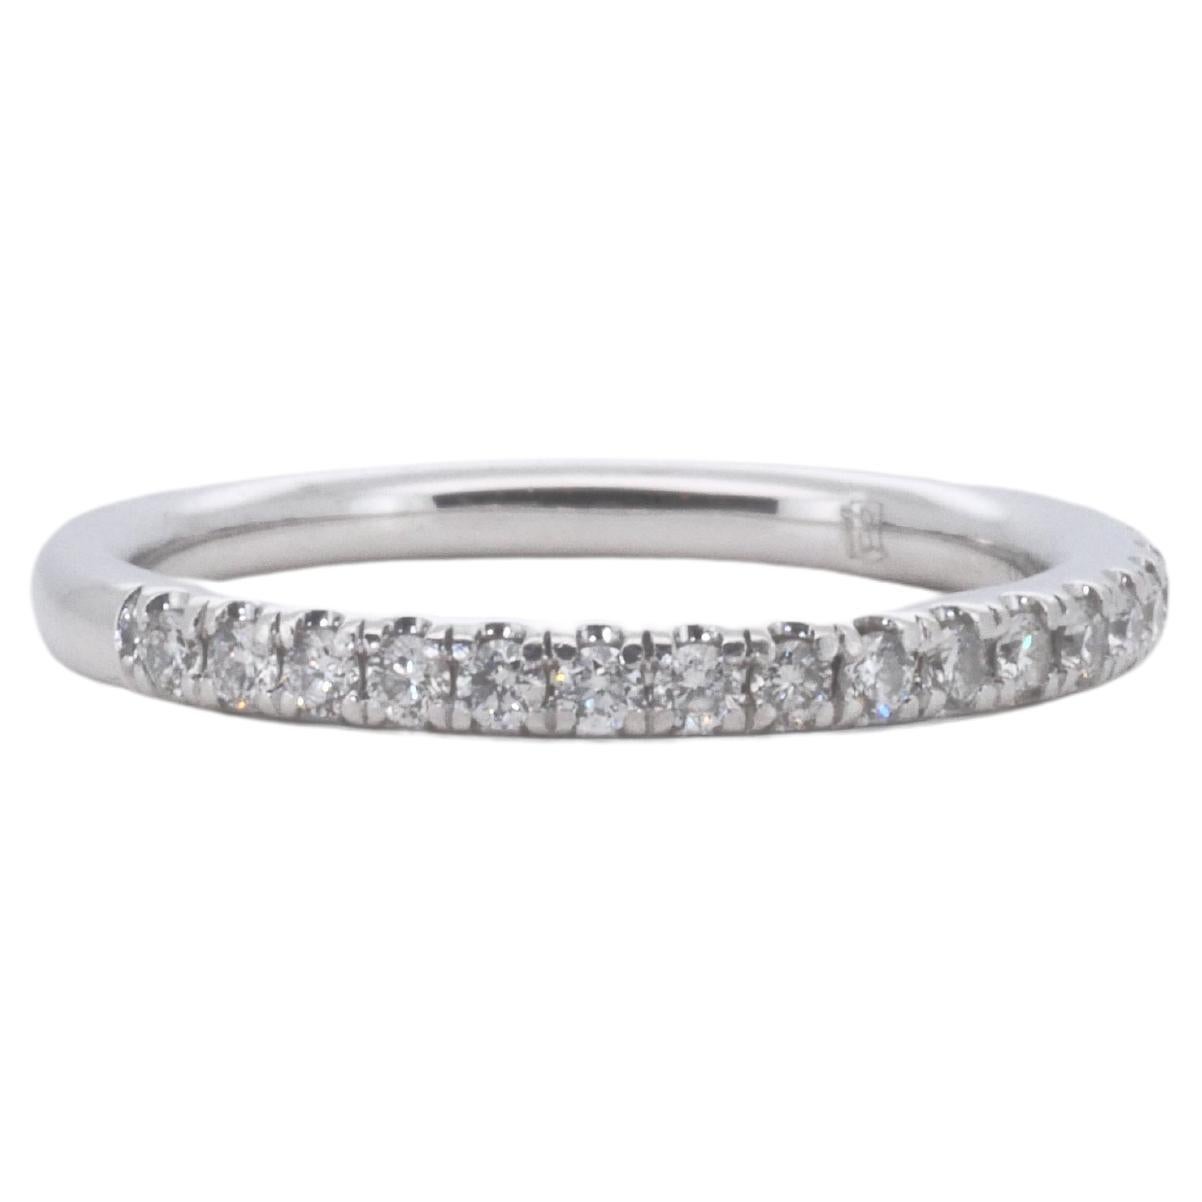 Elegant Platinum Pave Thin Band Ring with 0.28 Carat of Natural Diamonds